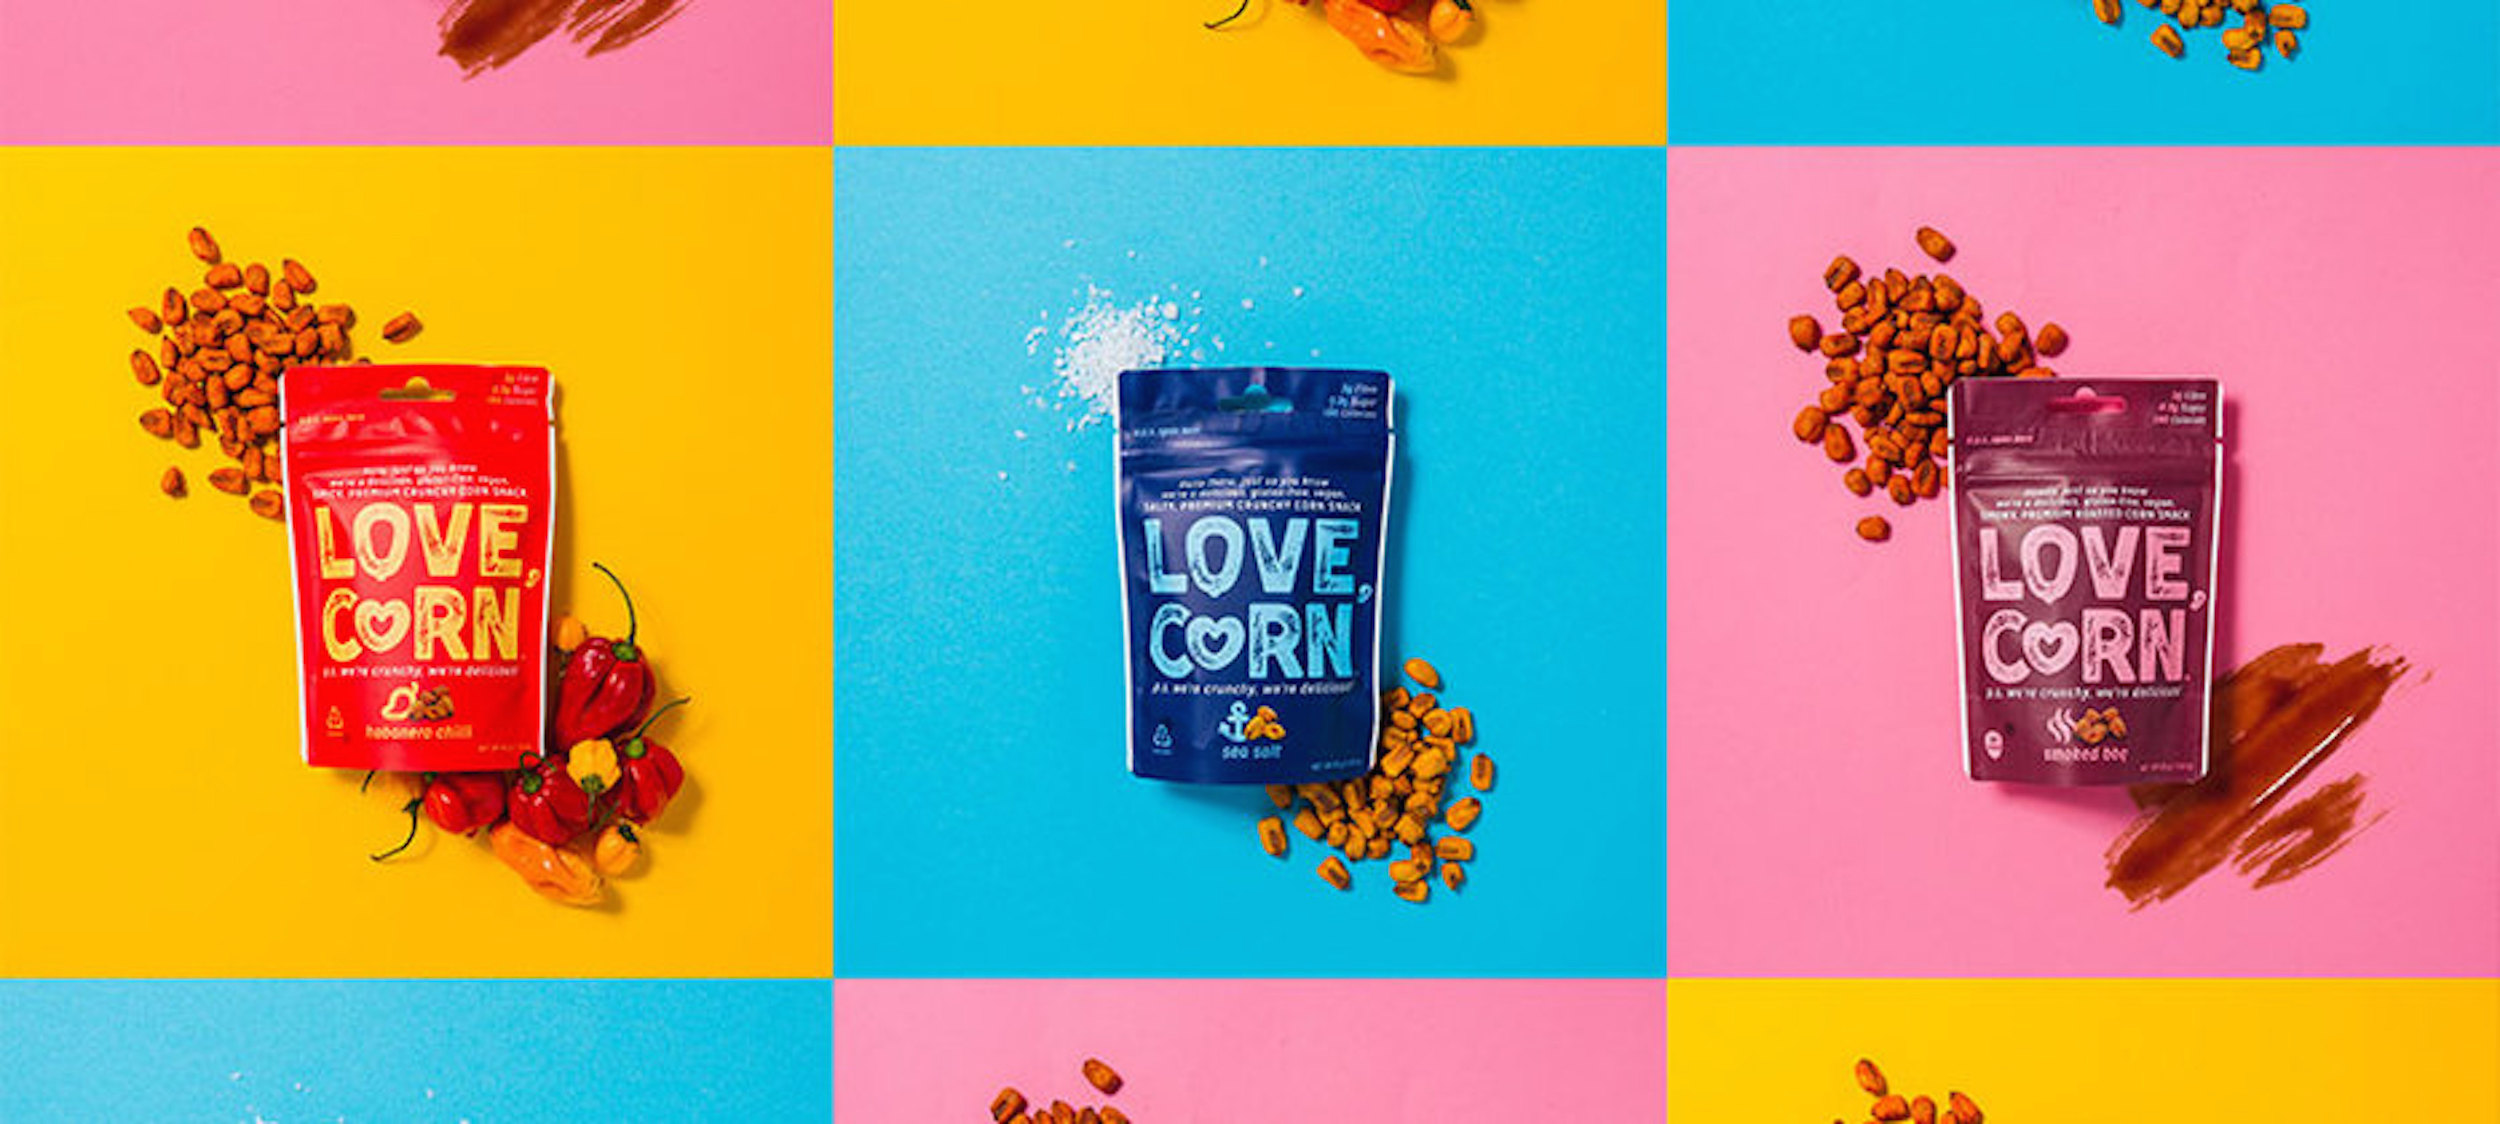 Wonderful, Love Corn fulfill consumer demand for salty snacks